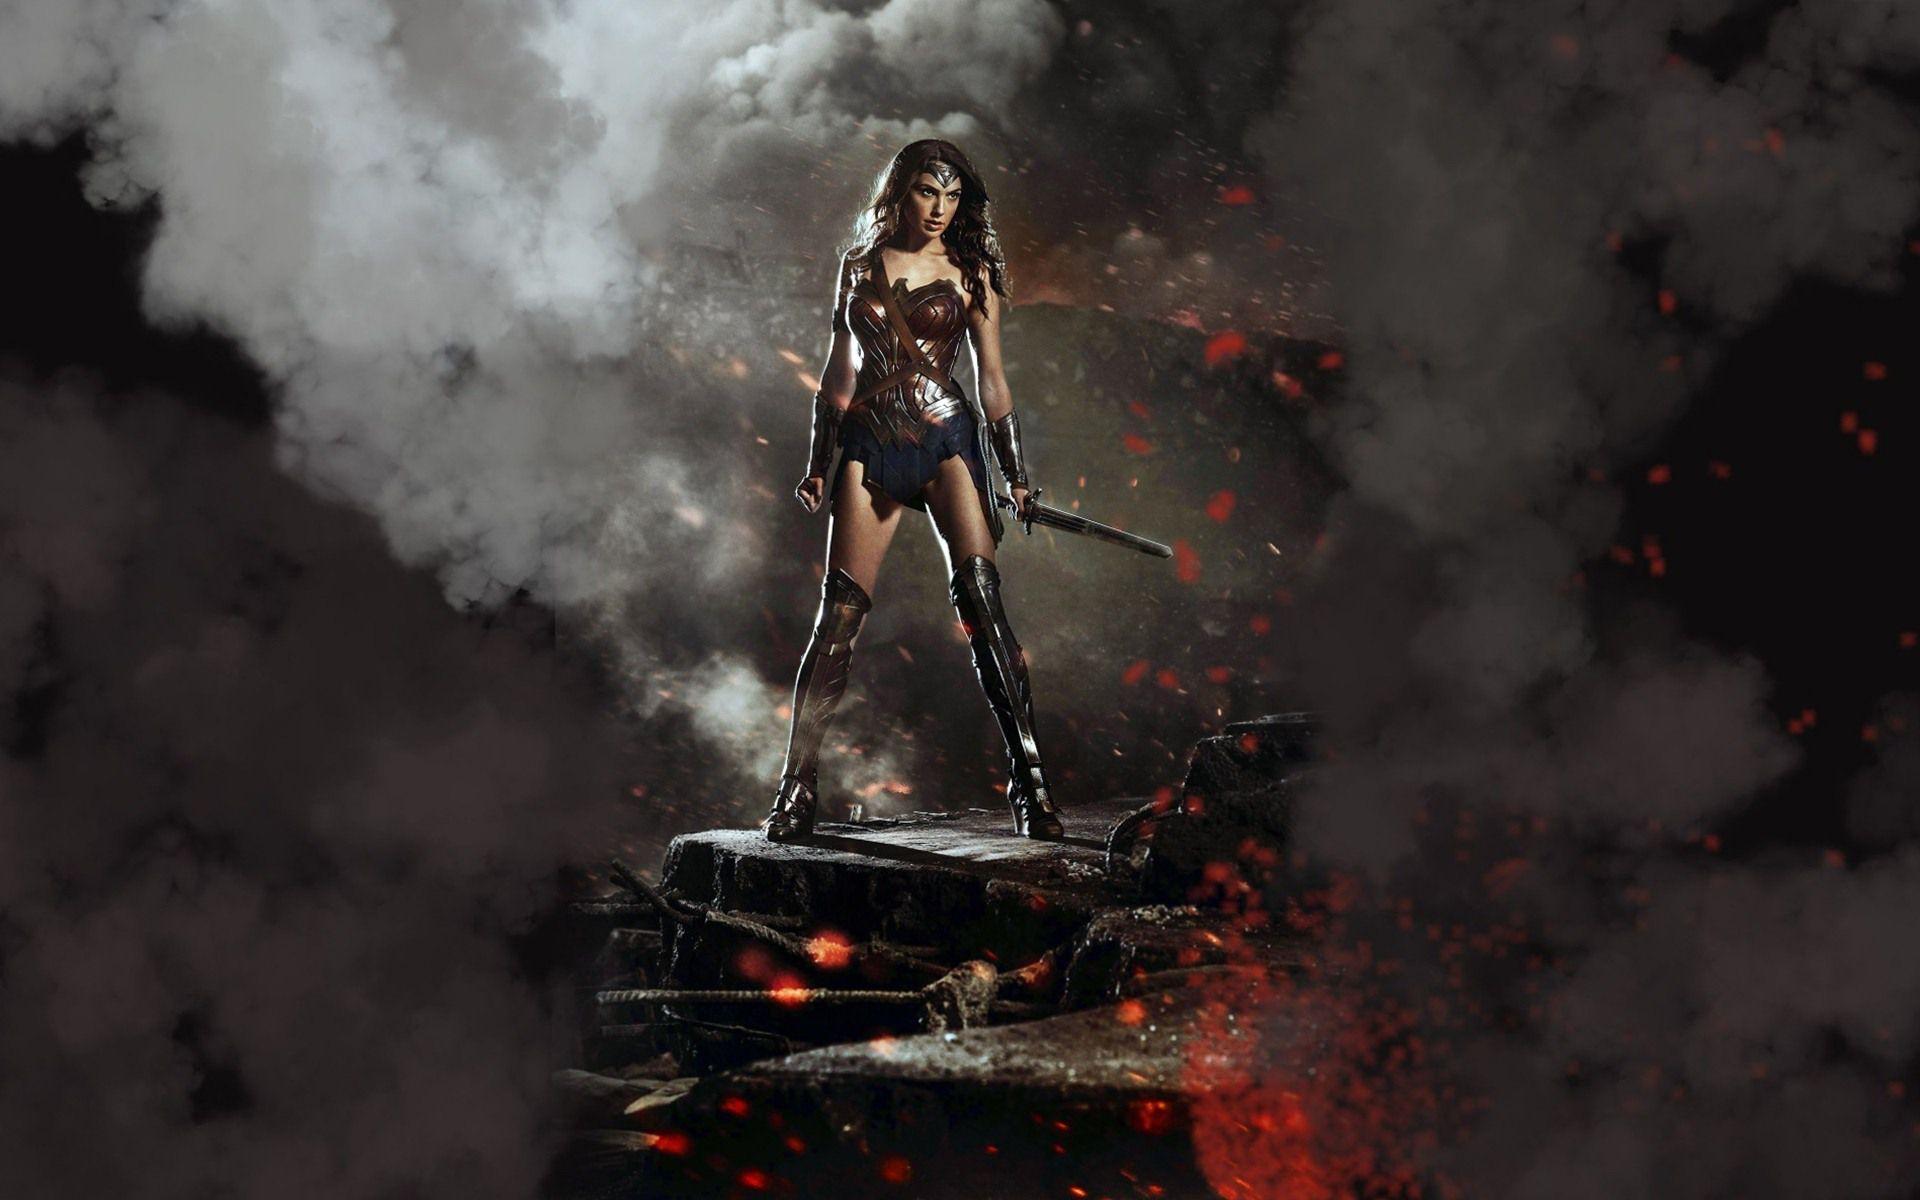 Wonder Woman film 2017 HD wallpaper free download